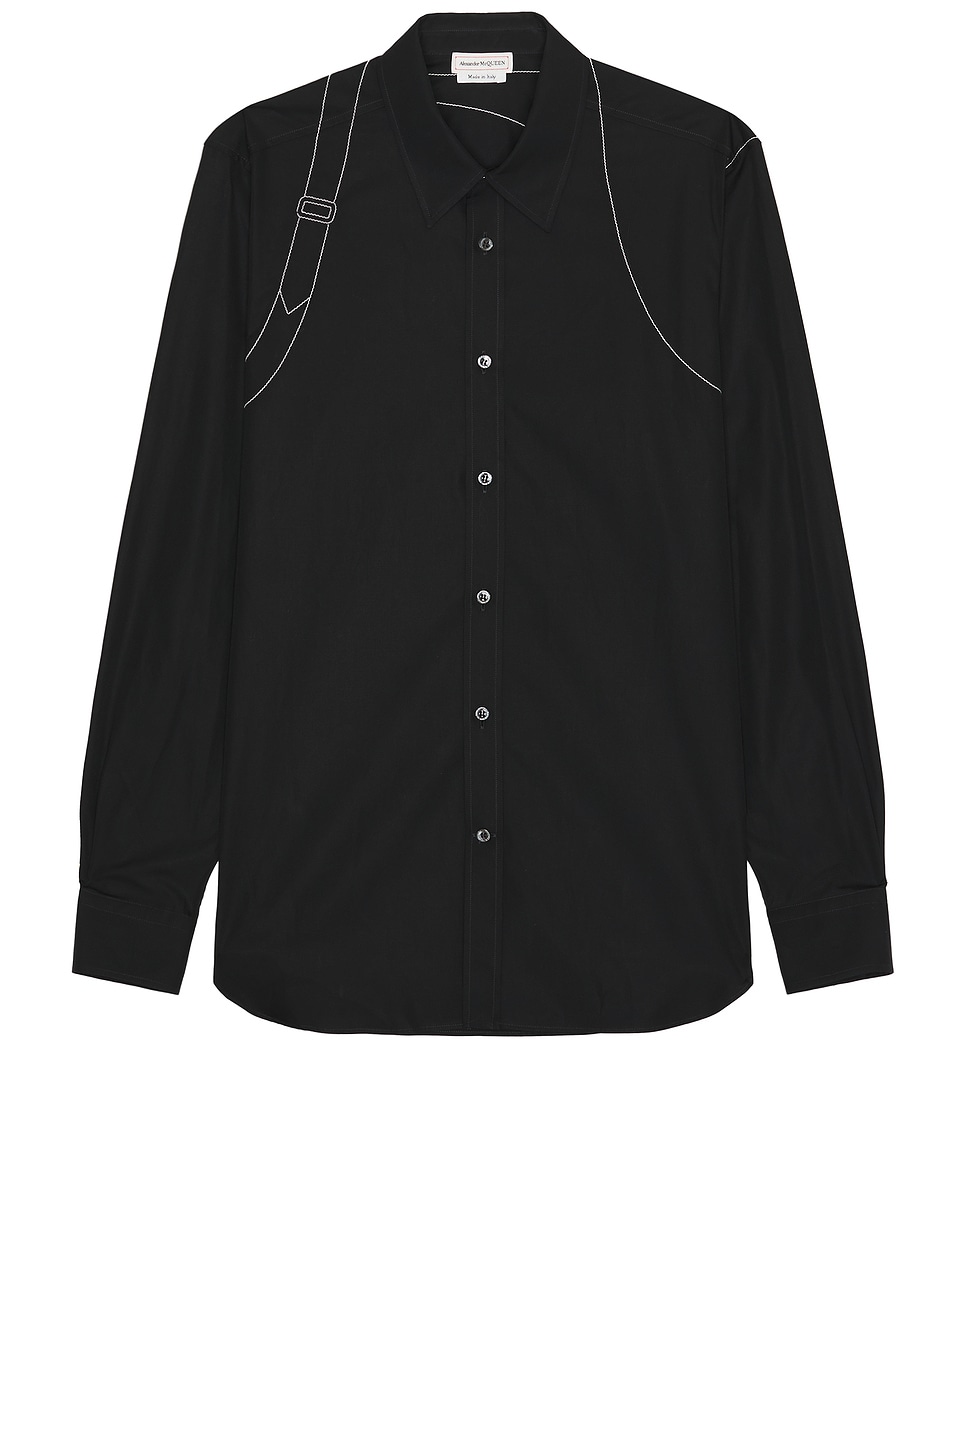 Alexander Mcqueen Stitching Harness Long Sleeve Shirt In Black